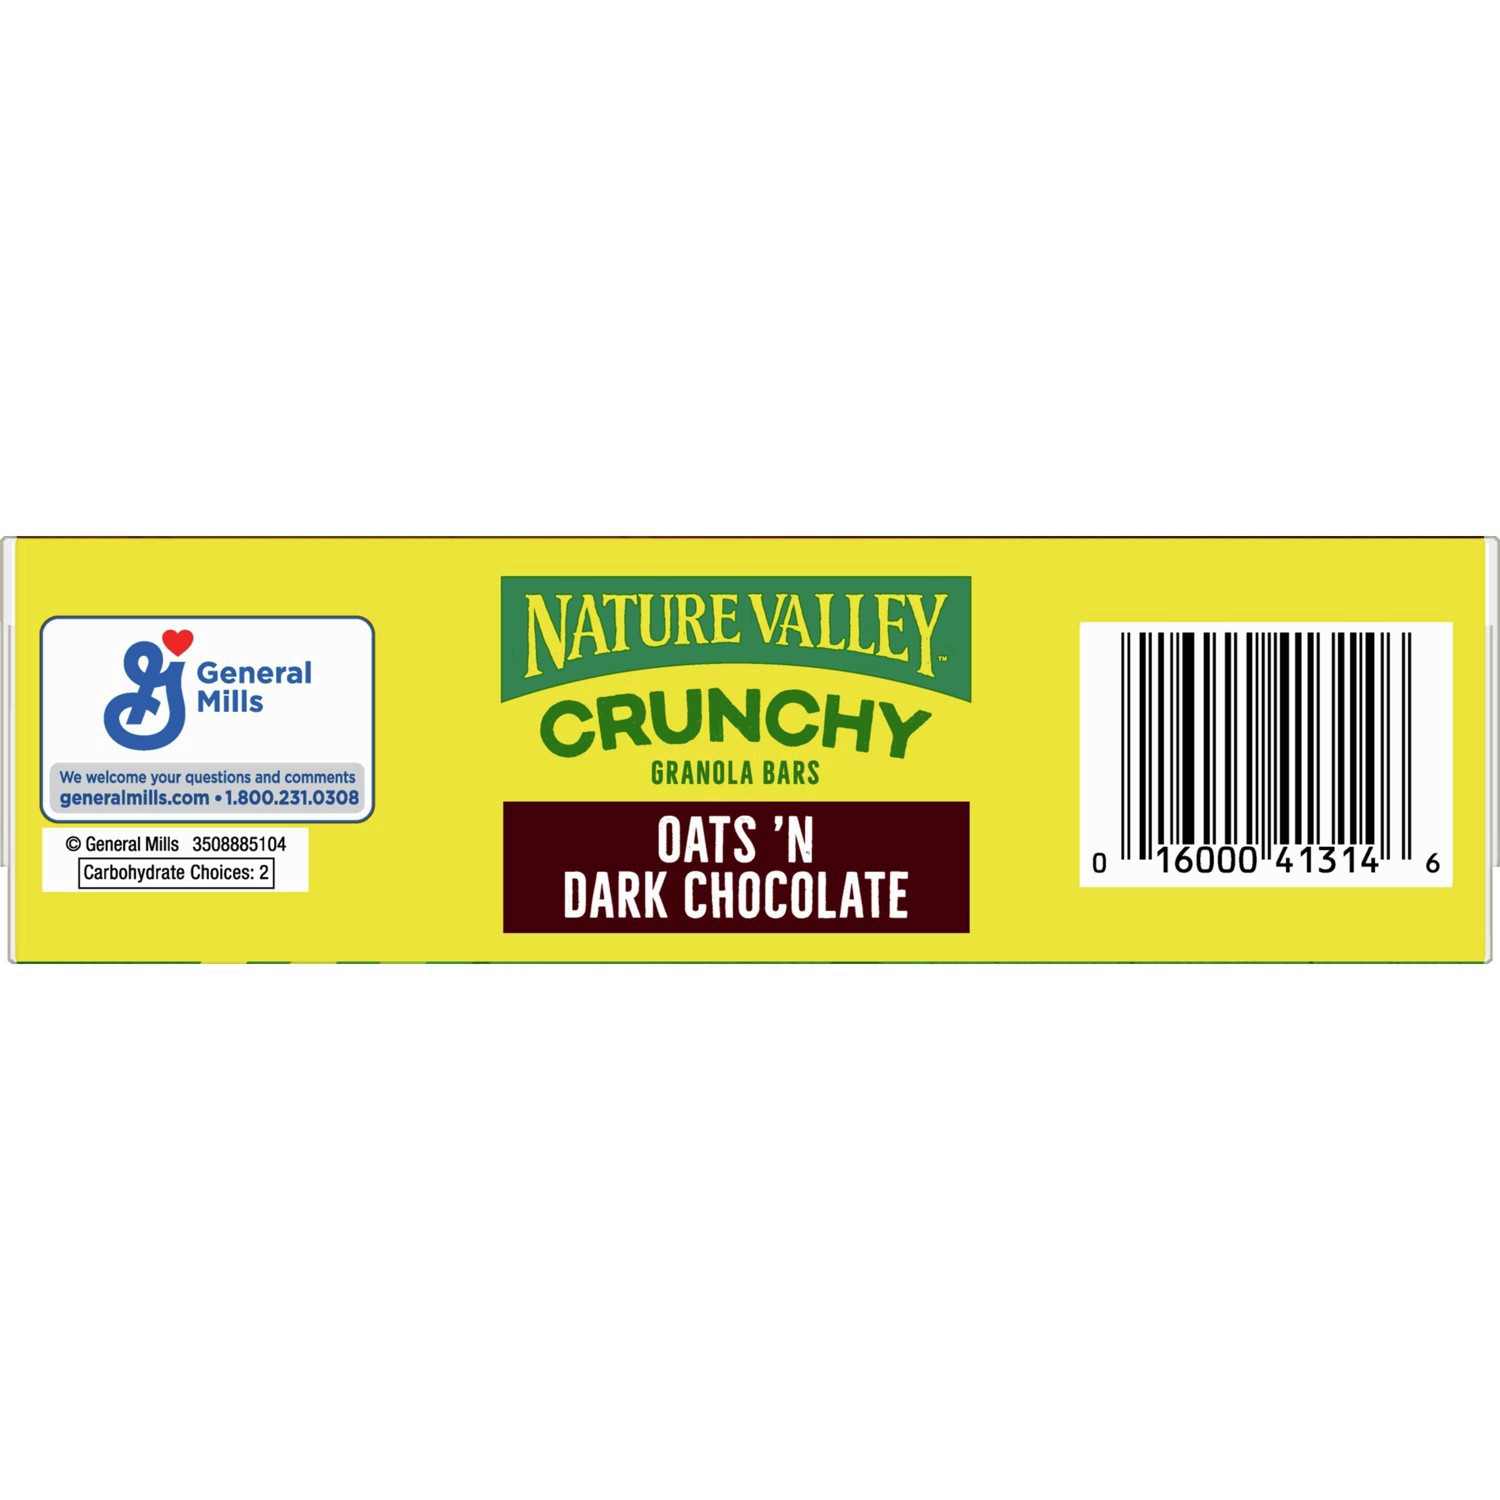 slide 6 of 137, Nature Valley Crunchy Granola Bars, Oats 'n Dark Chocolate, 6 ct, 12 bars, 6 ct